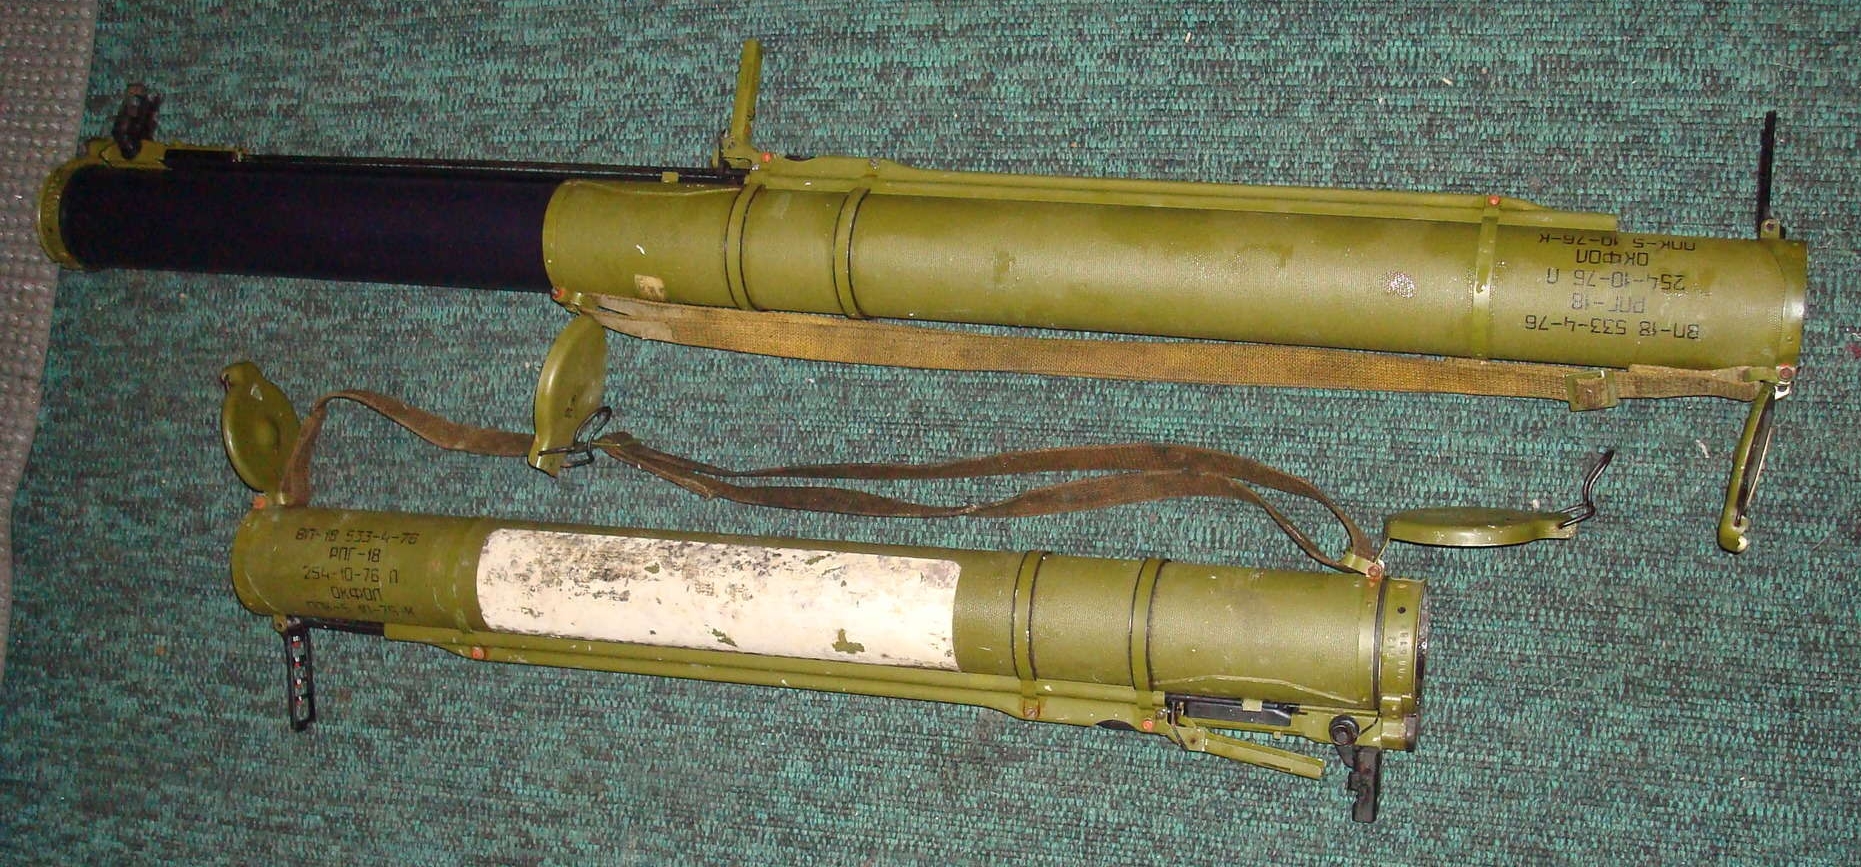 Модели рпг. Муха гранатомет РПГ -18. Реактивная противотанковая граната РПГ-18 Муха. Граната РПГ 18. Ручной противотанковый гранатомёт «Муха» (РПГ-18).